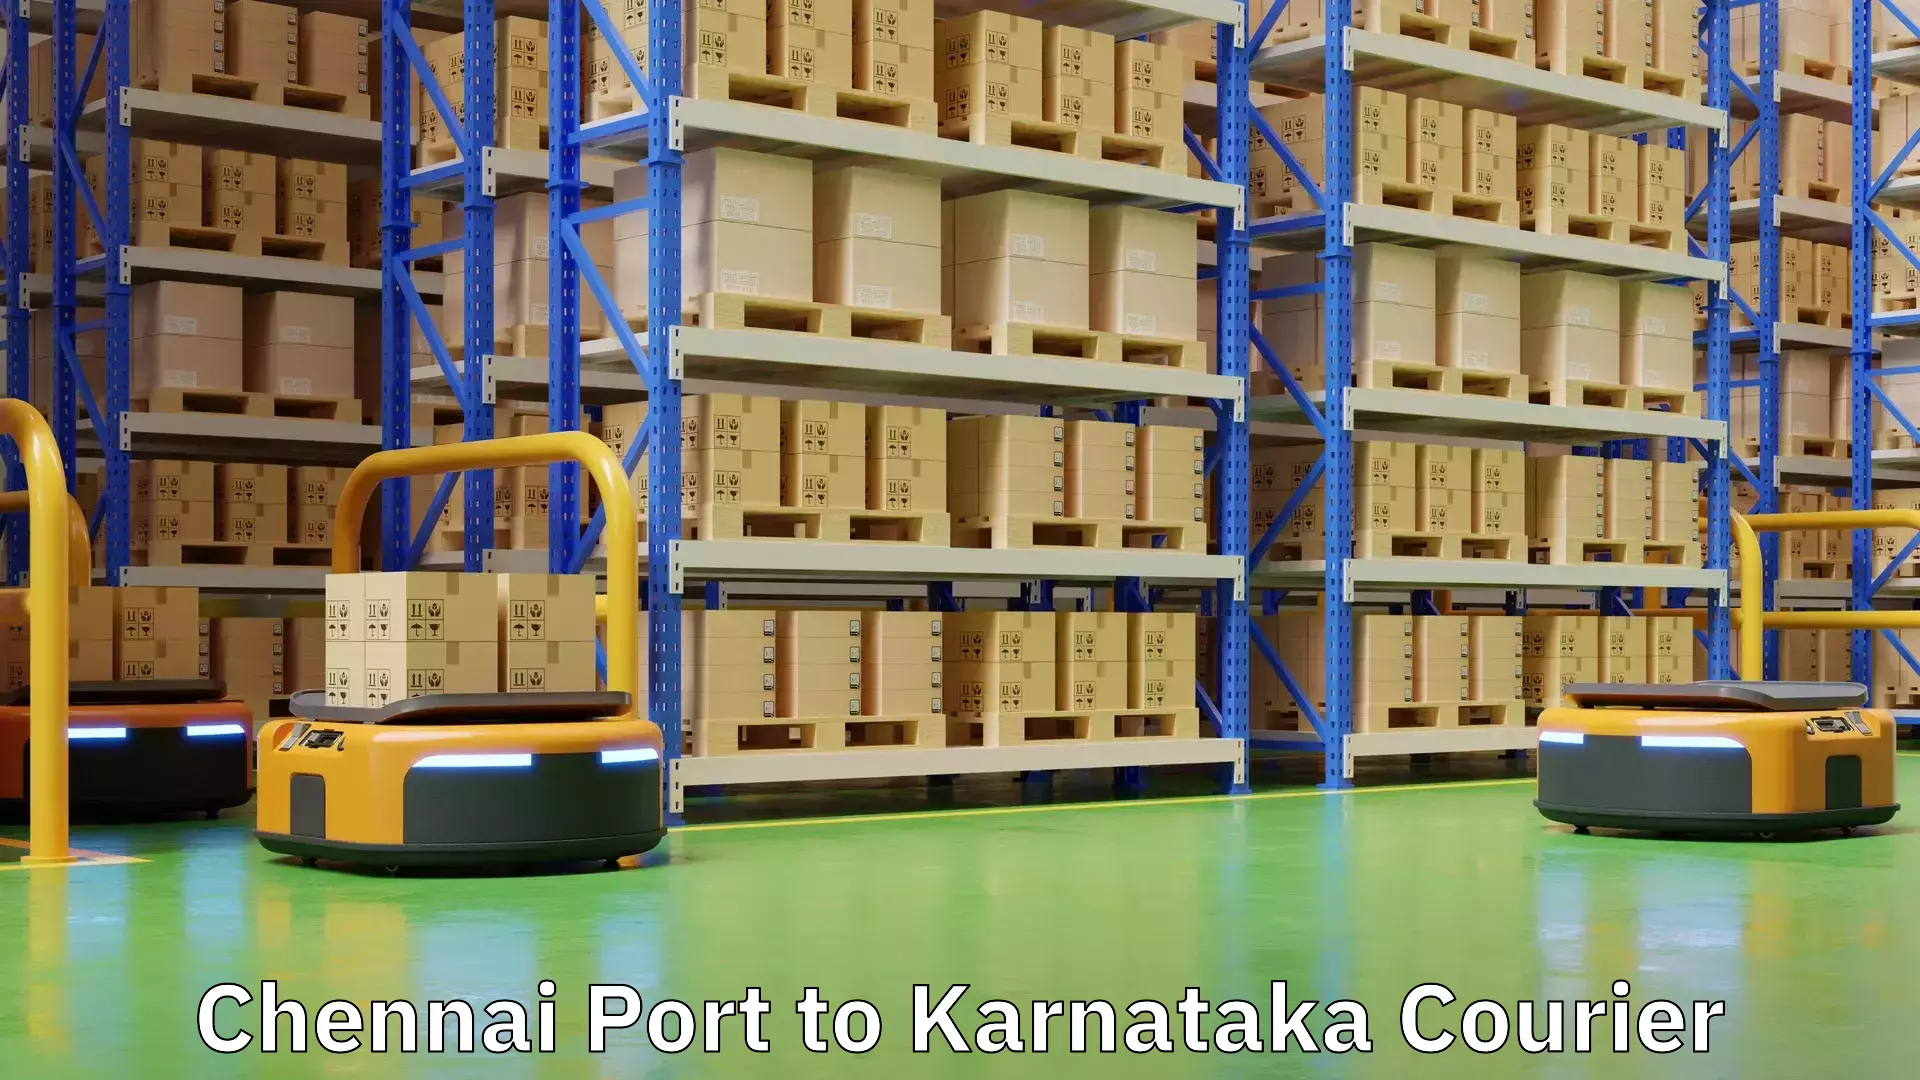 Express mail solutions Chennai Port to Karnataka